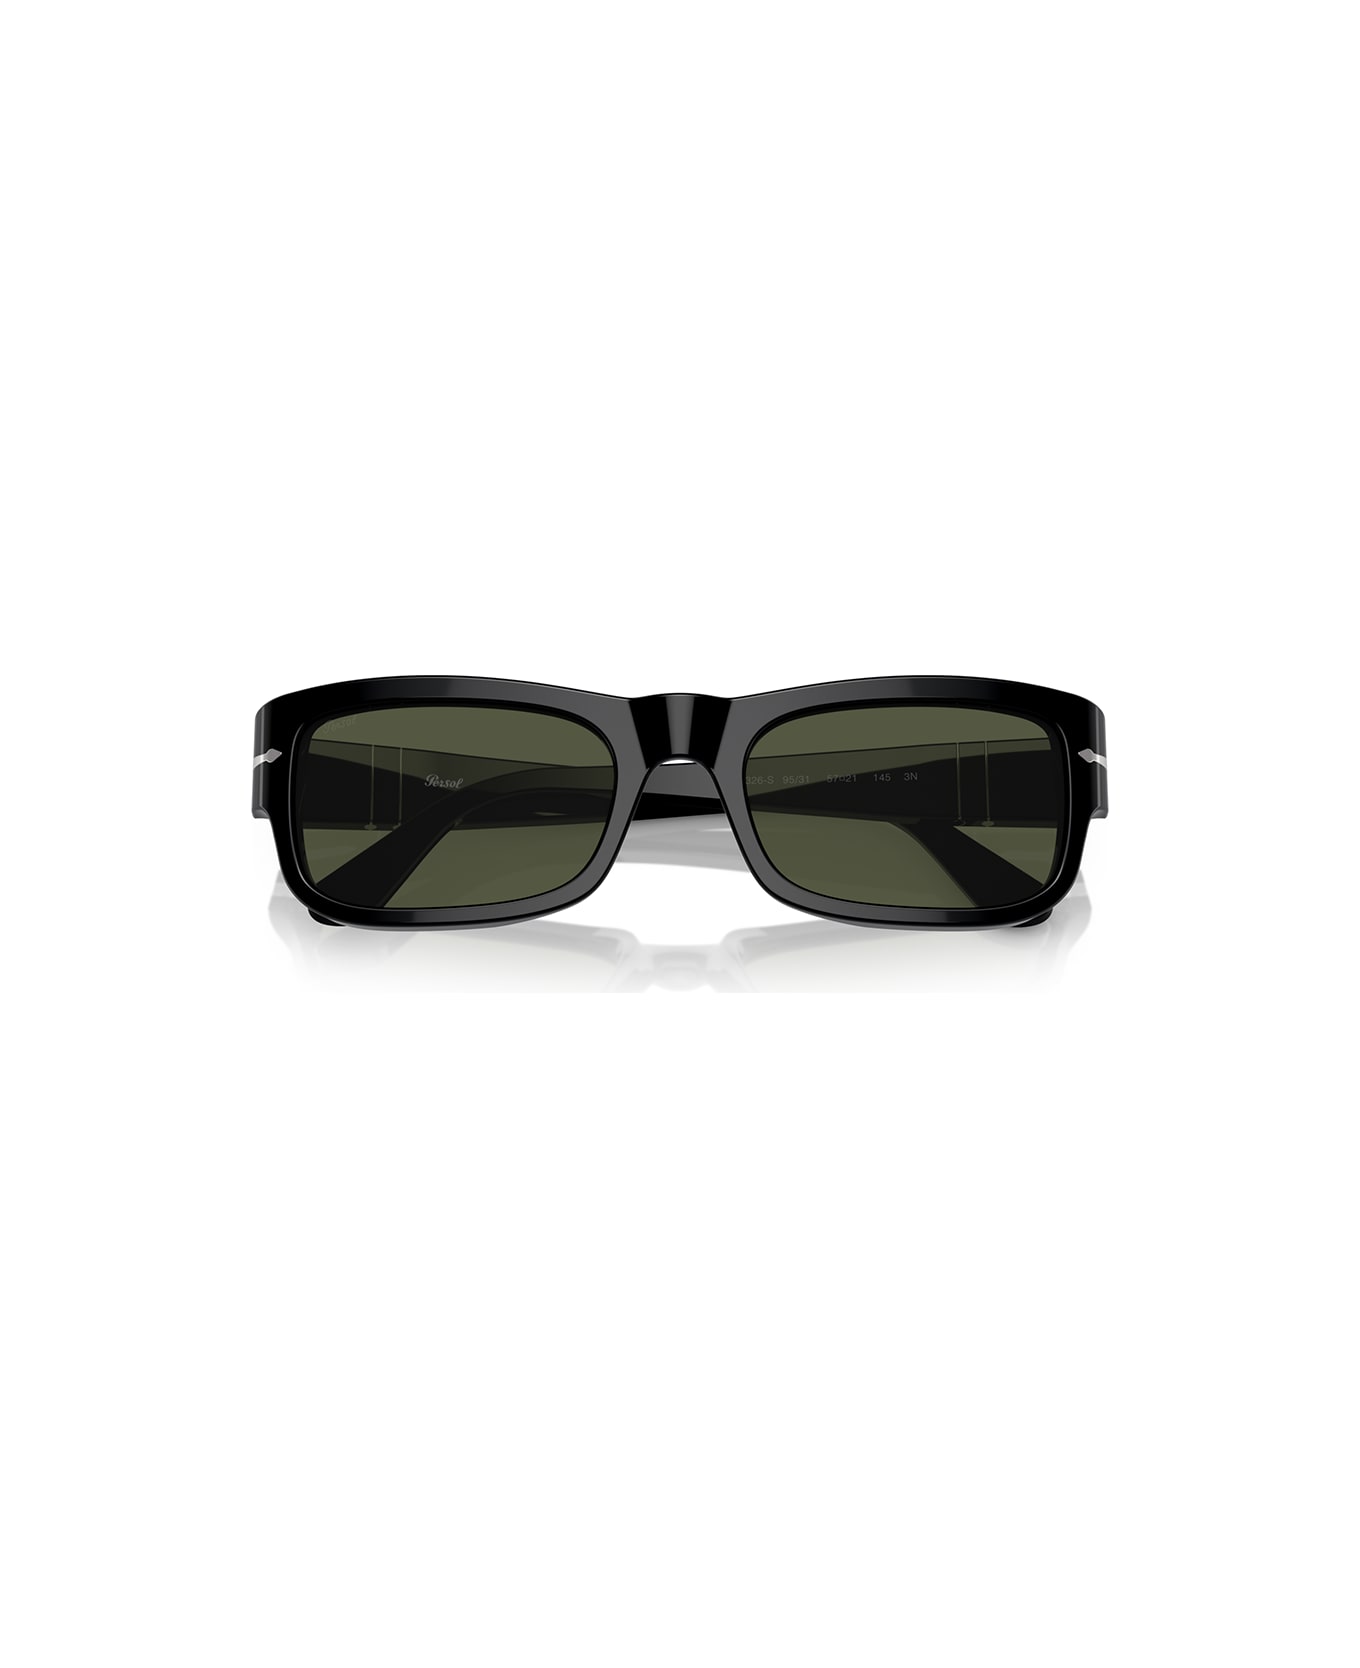 Persol Sunglasses - Nero/Verde サングラス